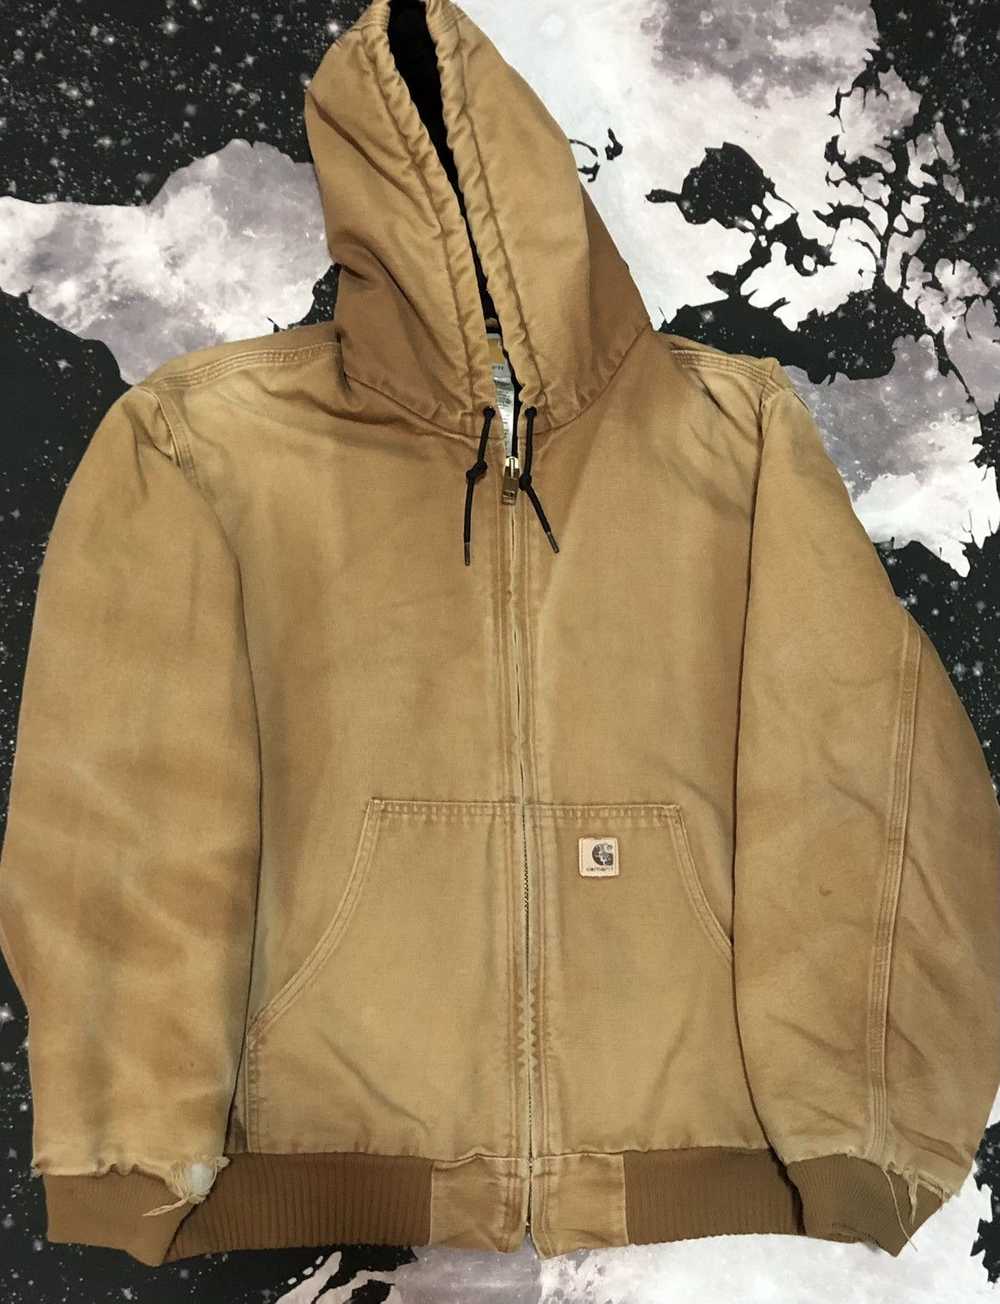 Carhartt × Hype × Other Carhartt jacket - image 1